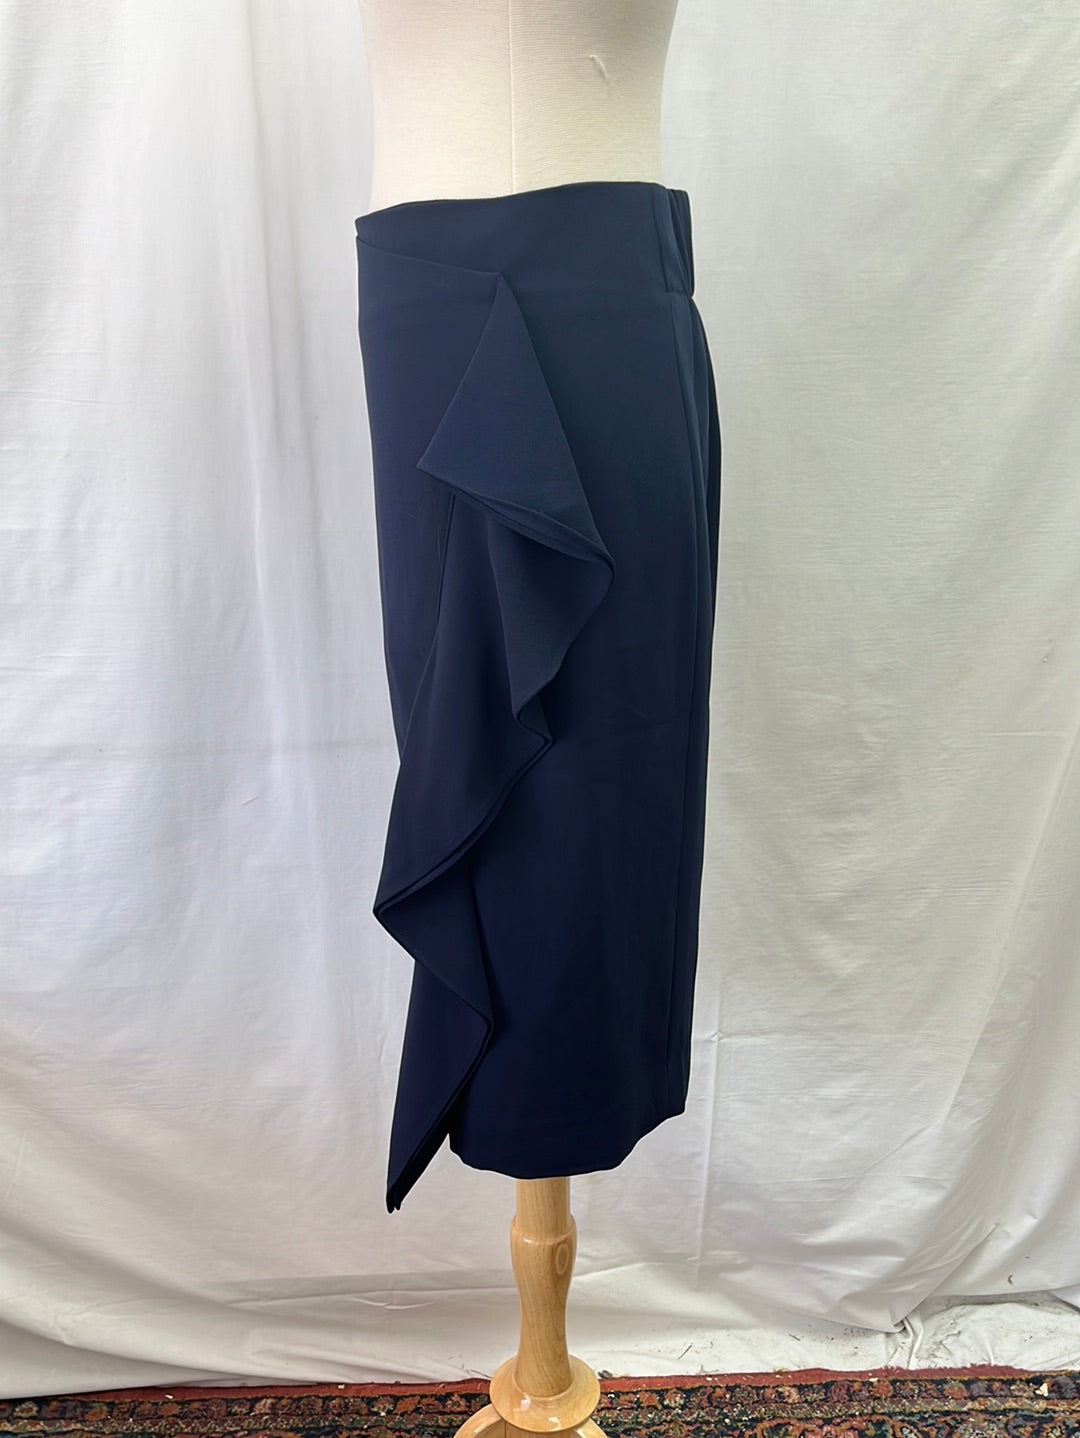 NWT -- J. CREW Navy Ruffle Faux Wrap Skirt -- Size: 2